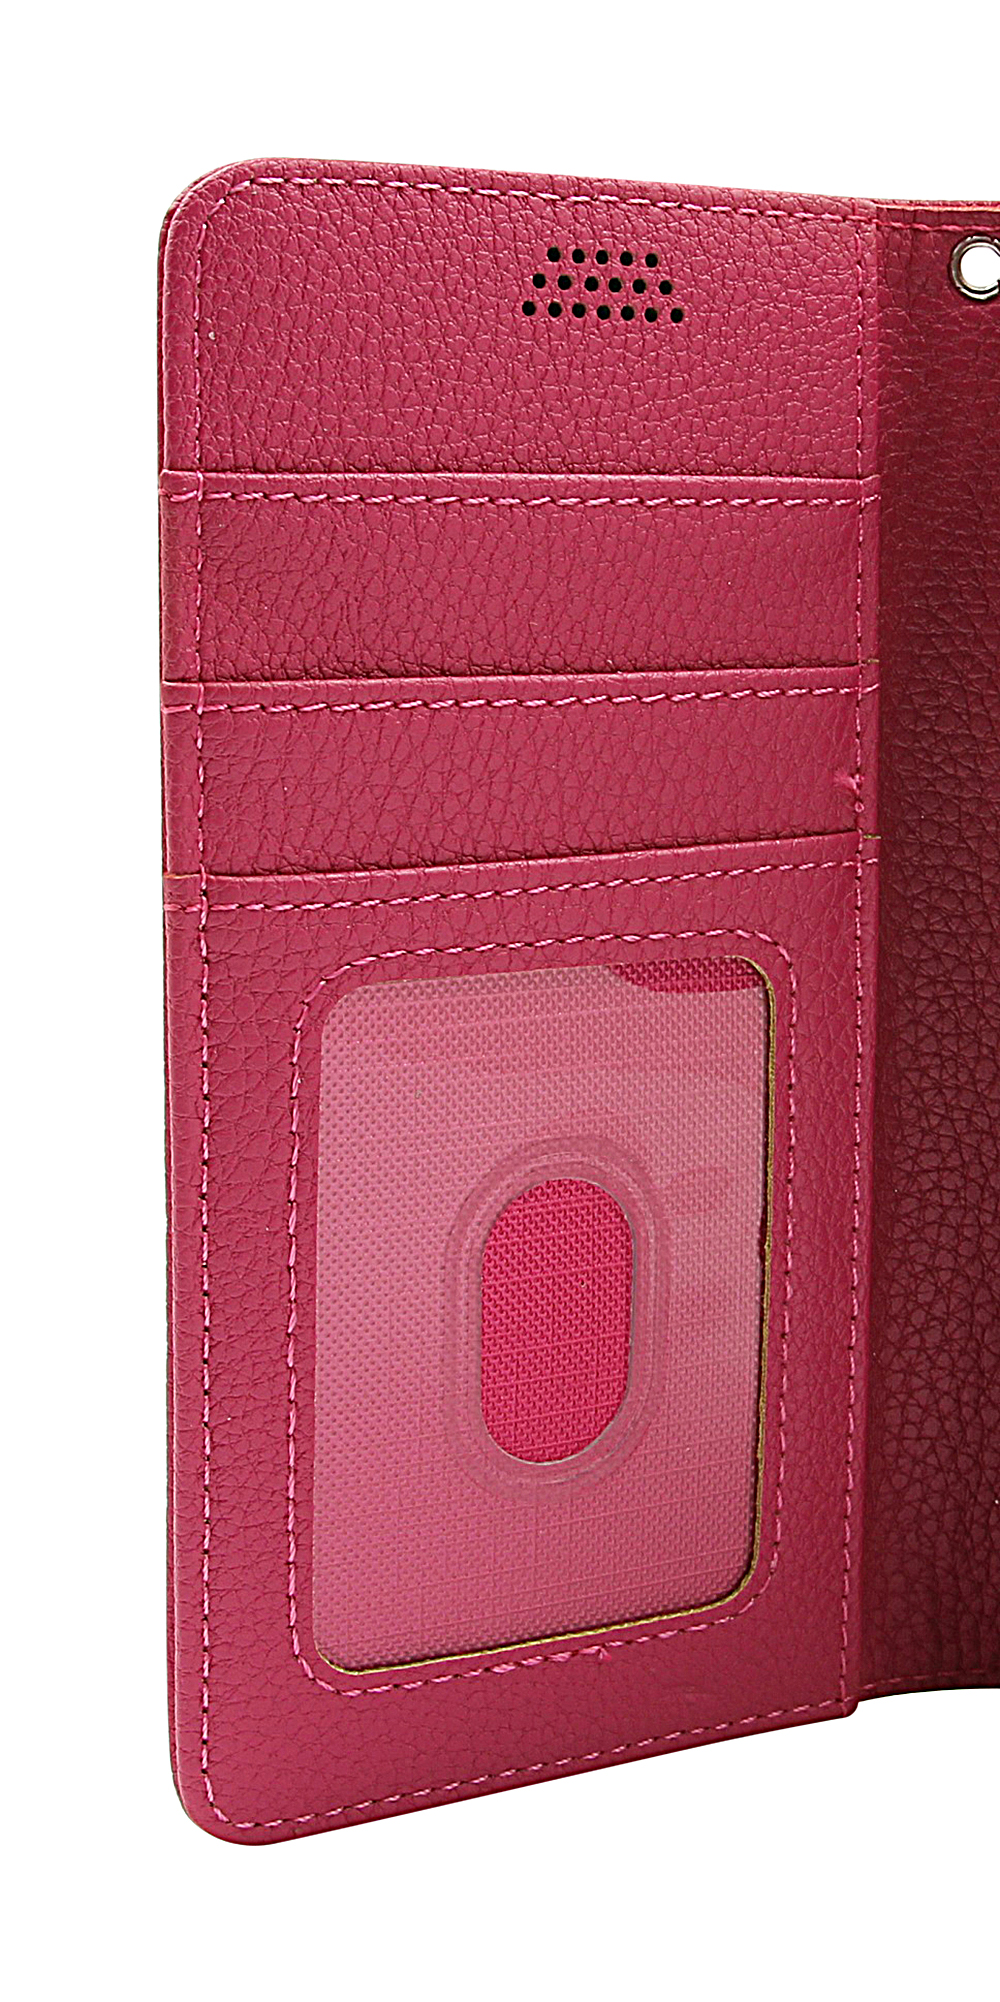 billigamobilskydd.seNew Standcase Wallet Sony Xperia XZ1 (G8341)